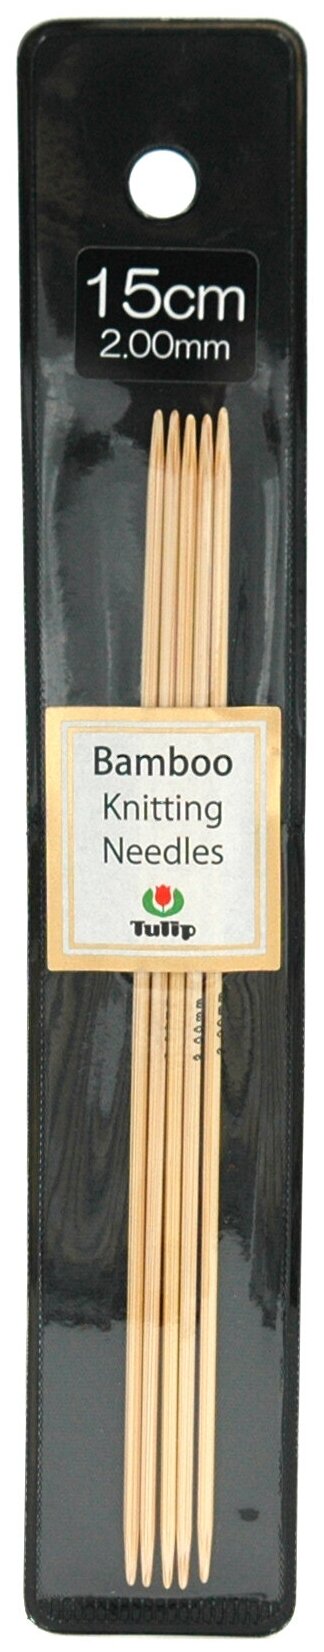 Спицы чулочные Bamboo 2мм/15см, Tulip, KND060200